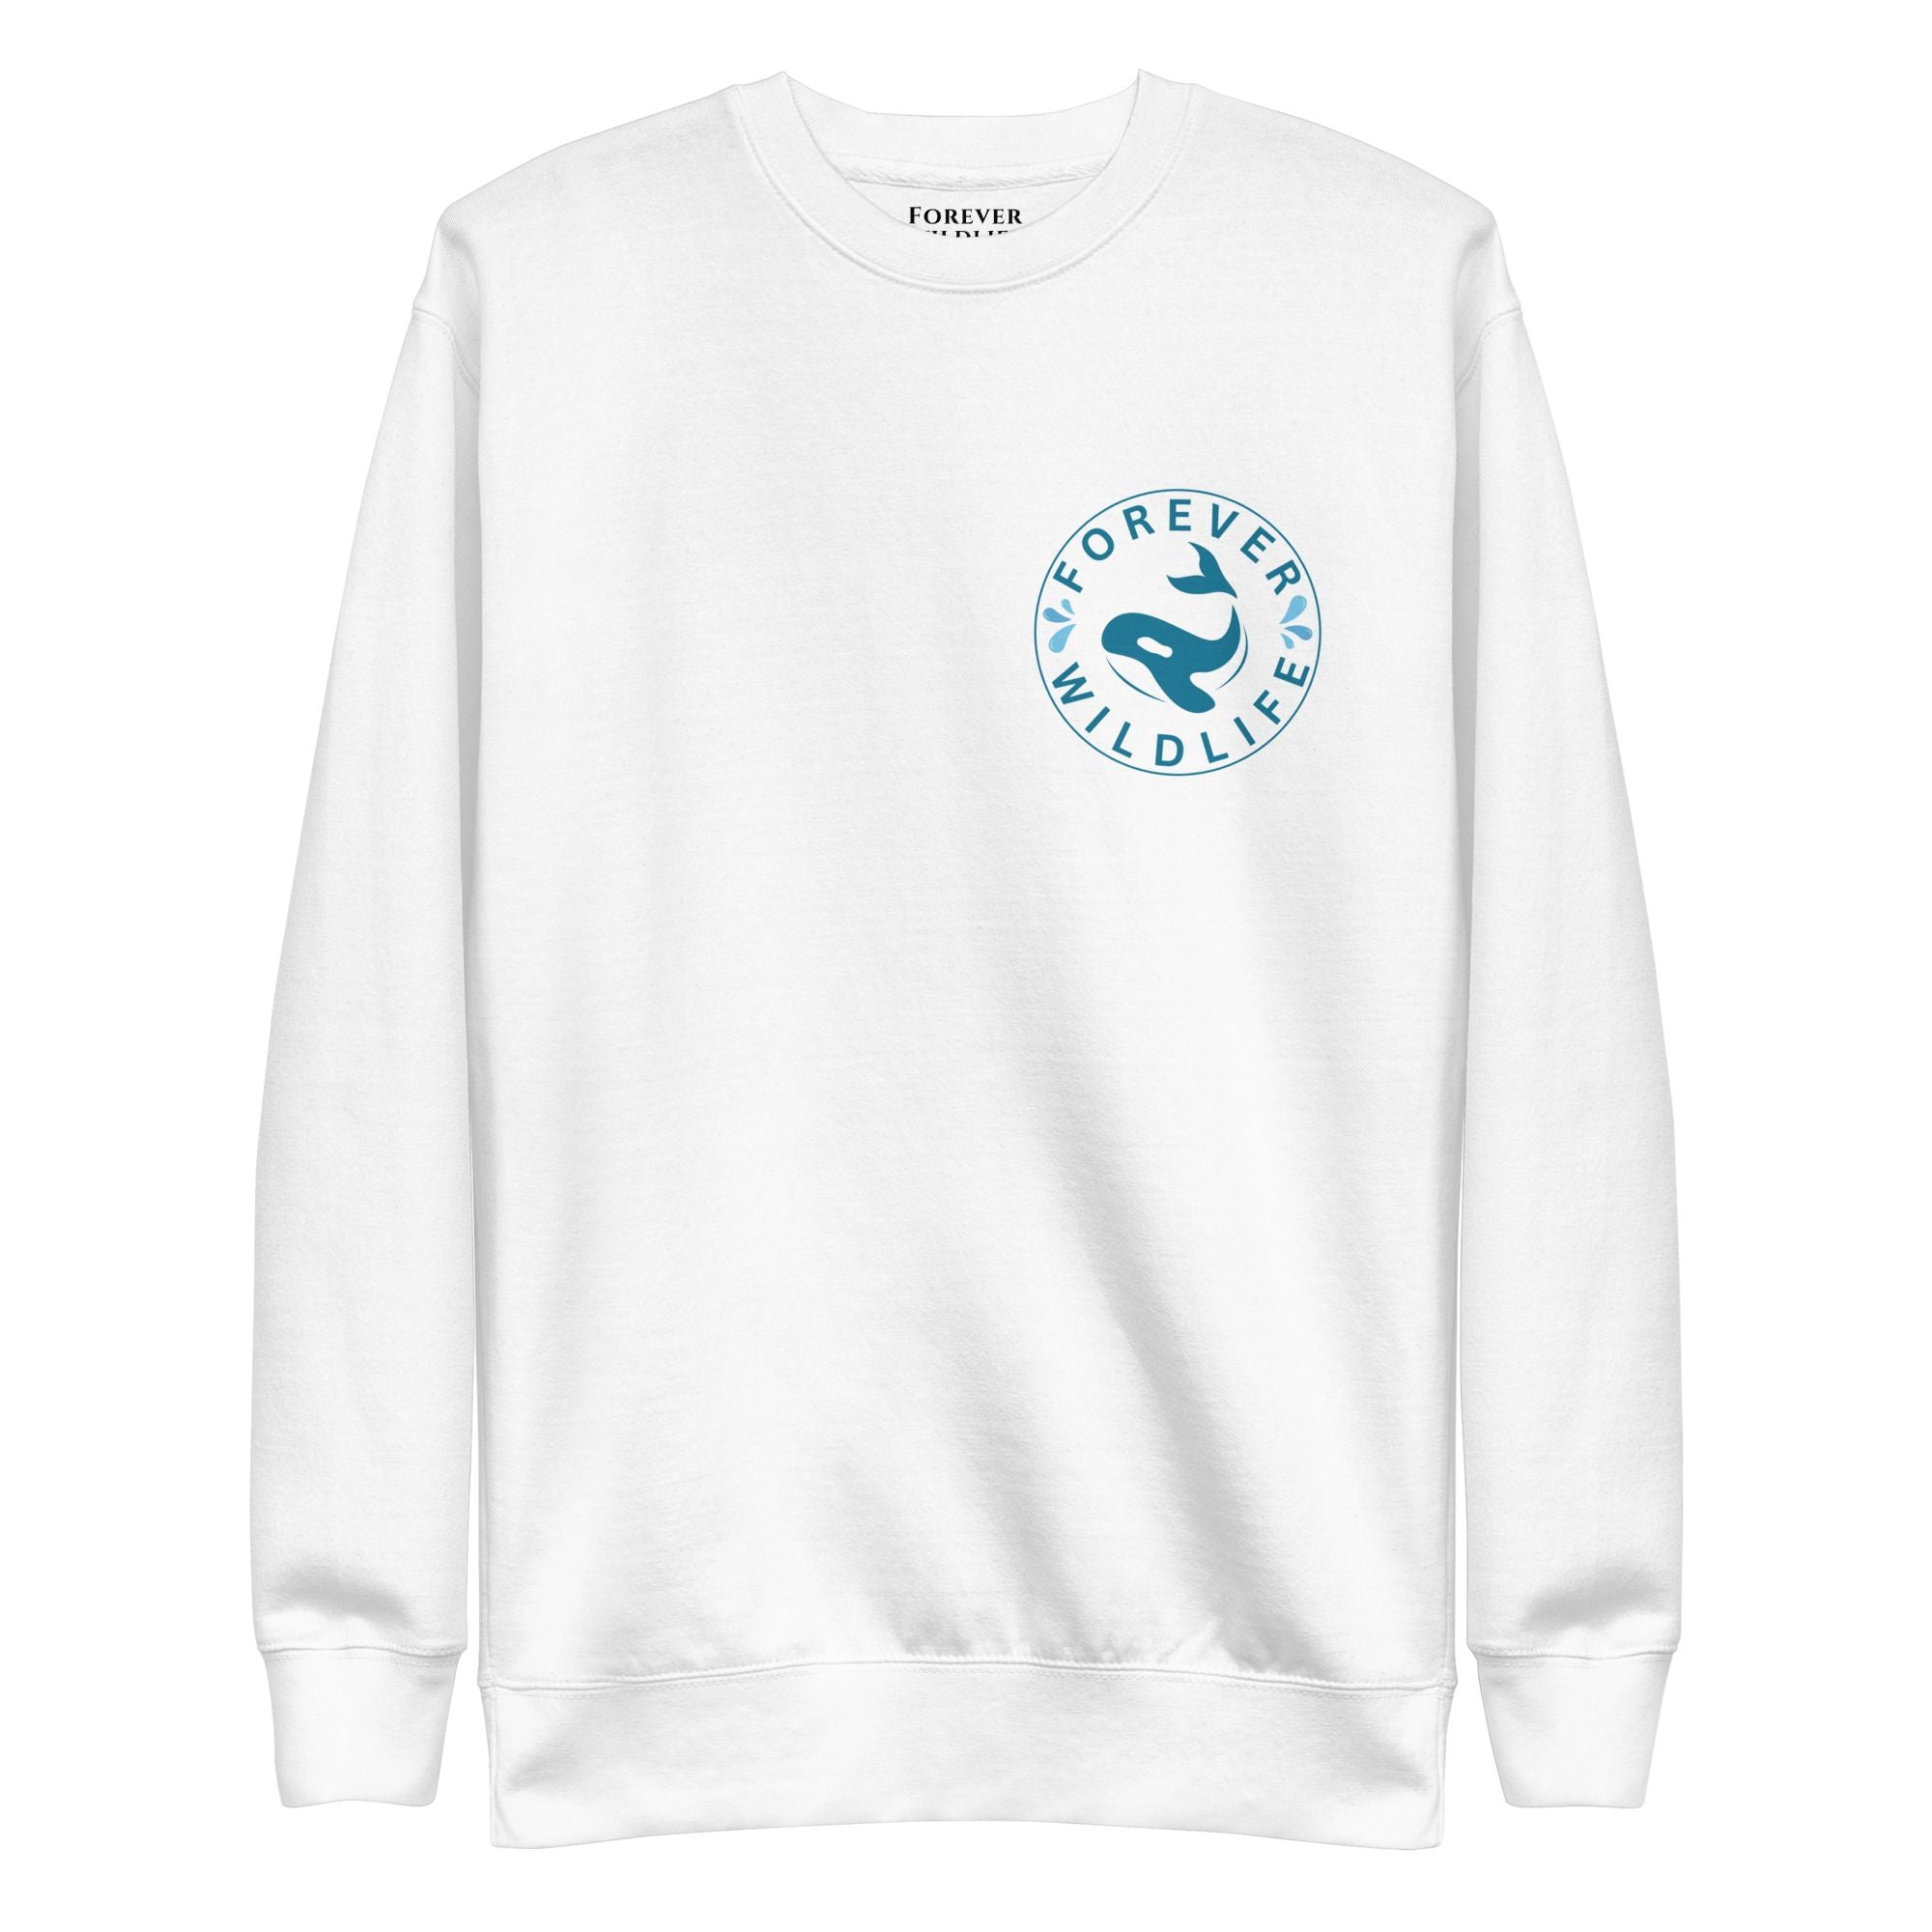  Orca Sweatshirt, beautiful White Orca Sweatshirt with Killer Whales on the sweatshirt by Forever Wildlife selling Wildlife Sweatshirts.